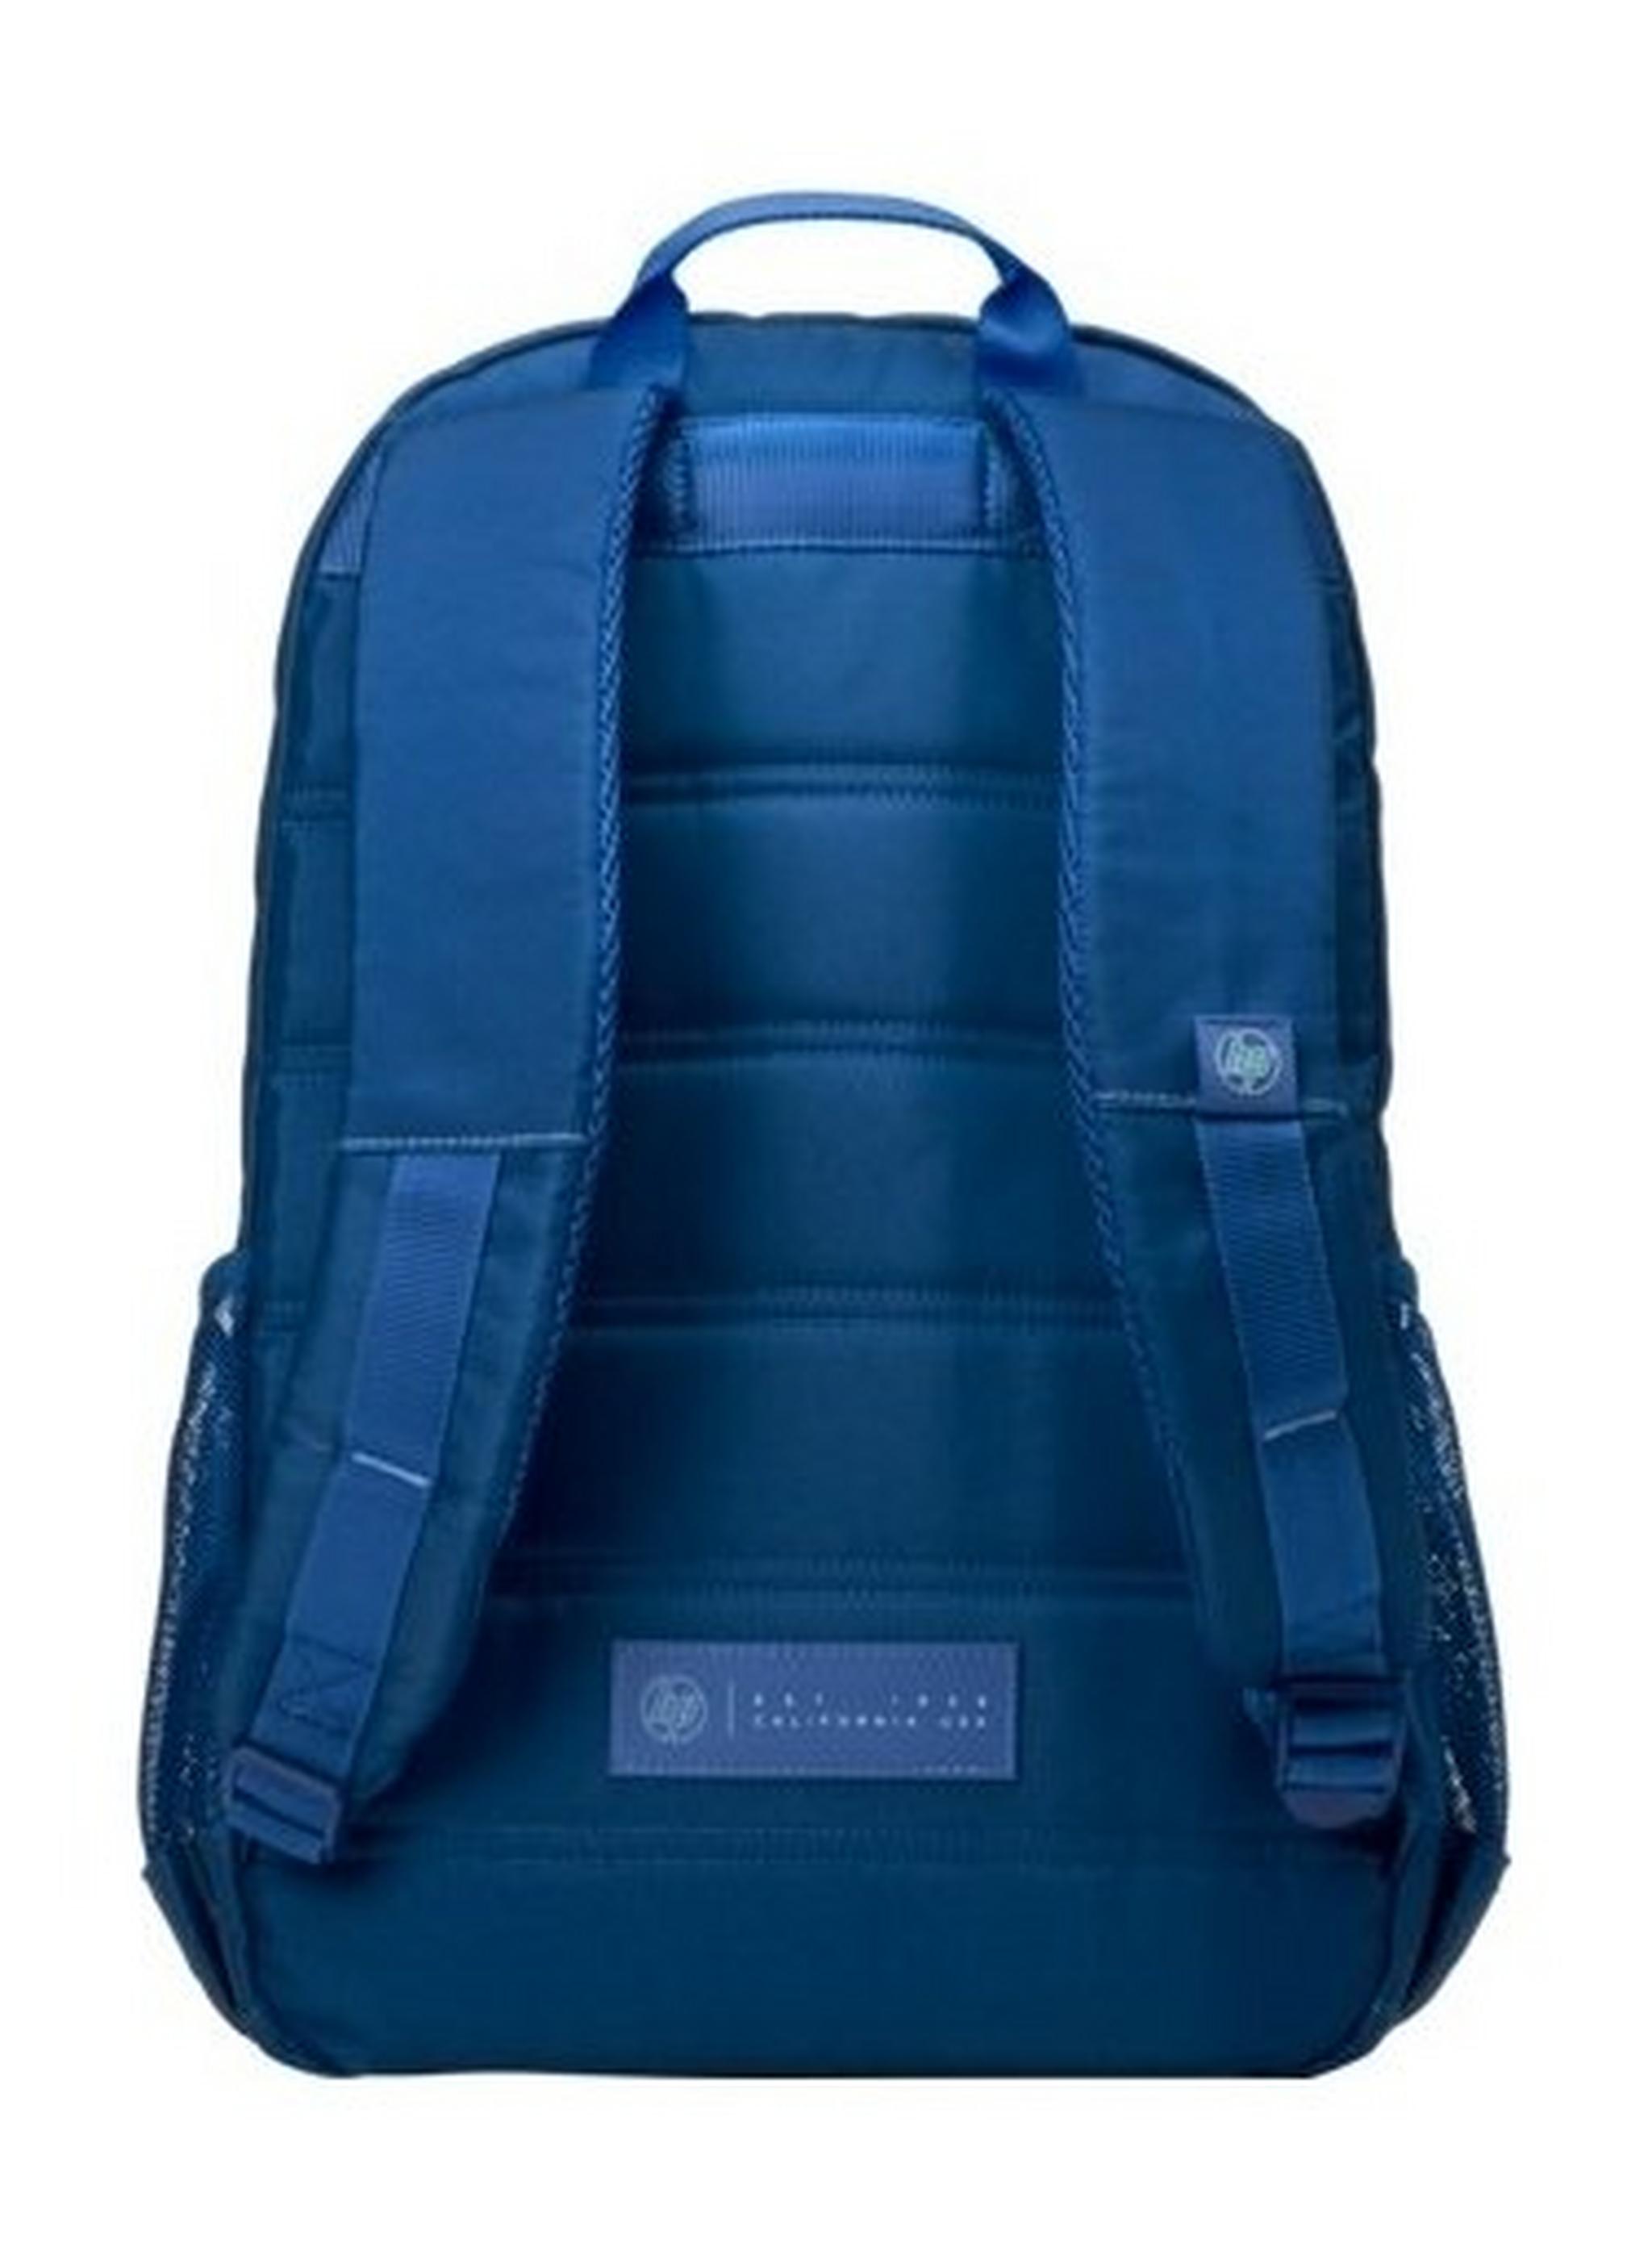 HP 15.6 Active Backpack (1LU24AA) - Blue/Yellow